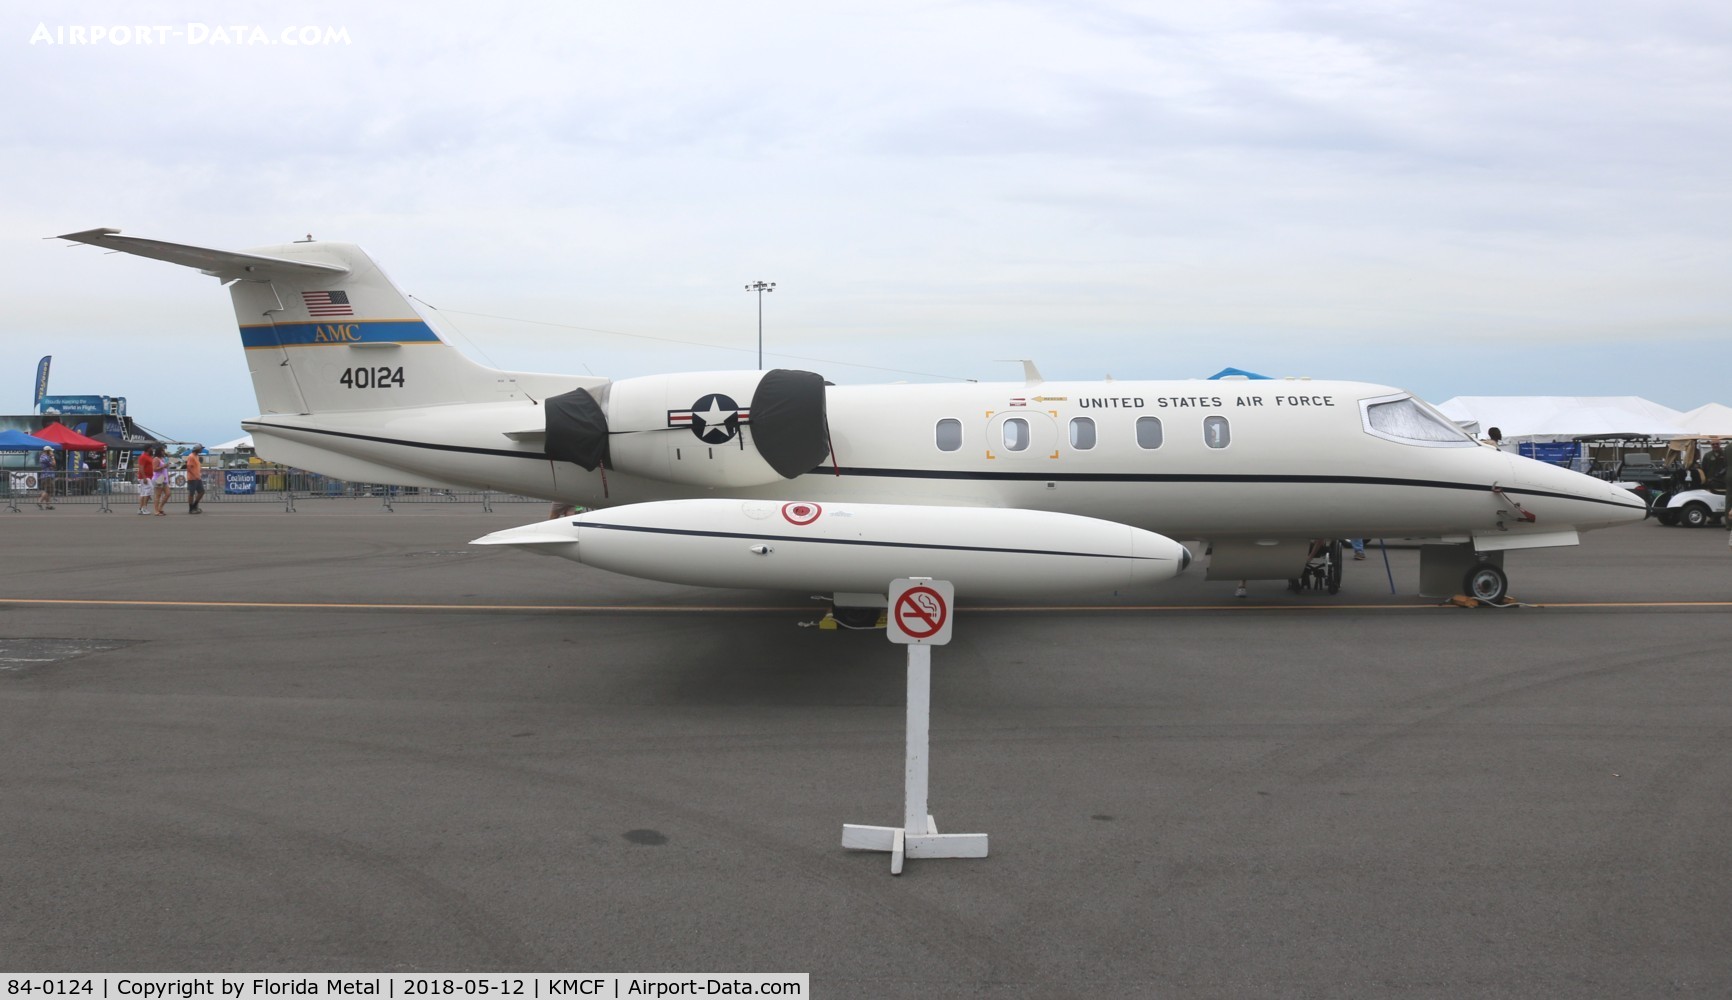 84-0124, 1984 Gates Learjet C-21A C/N 35A-570, C-21A zx